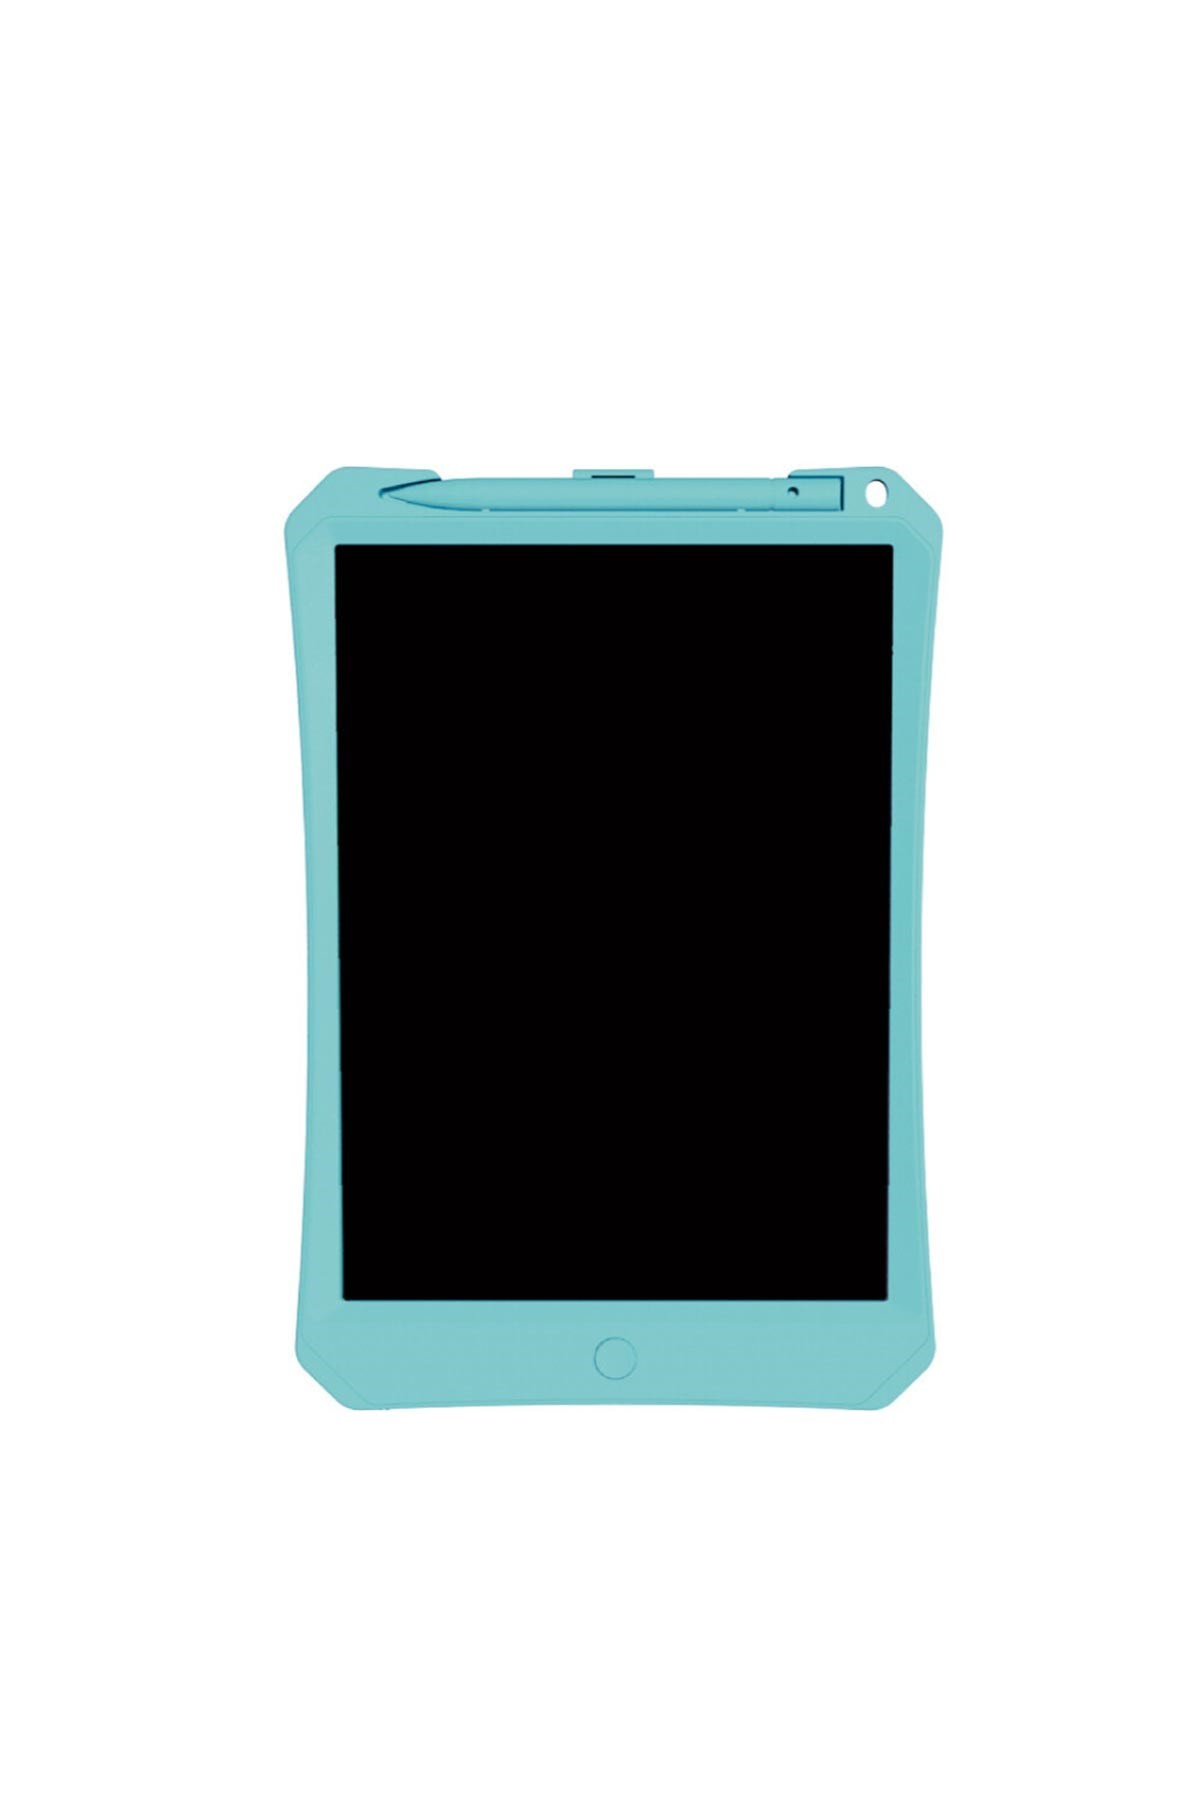 Xiaomi Wicue 11 Inç Turkuaz LCD Dijital Çizim Tableti